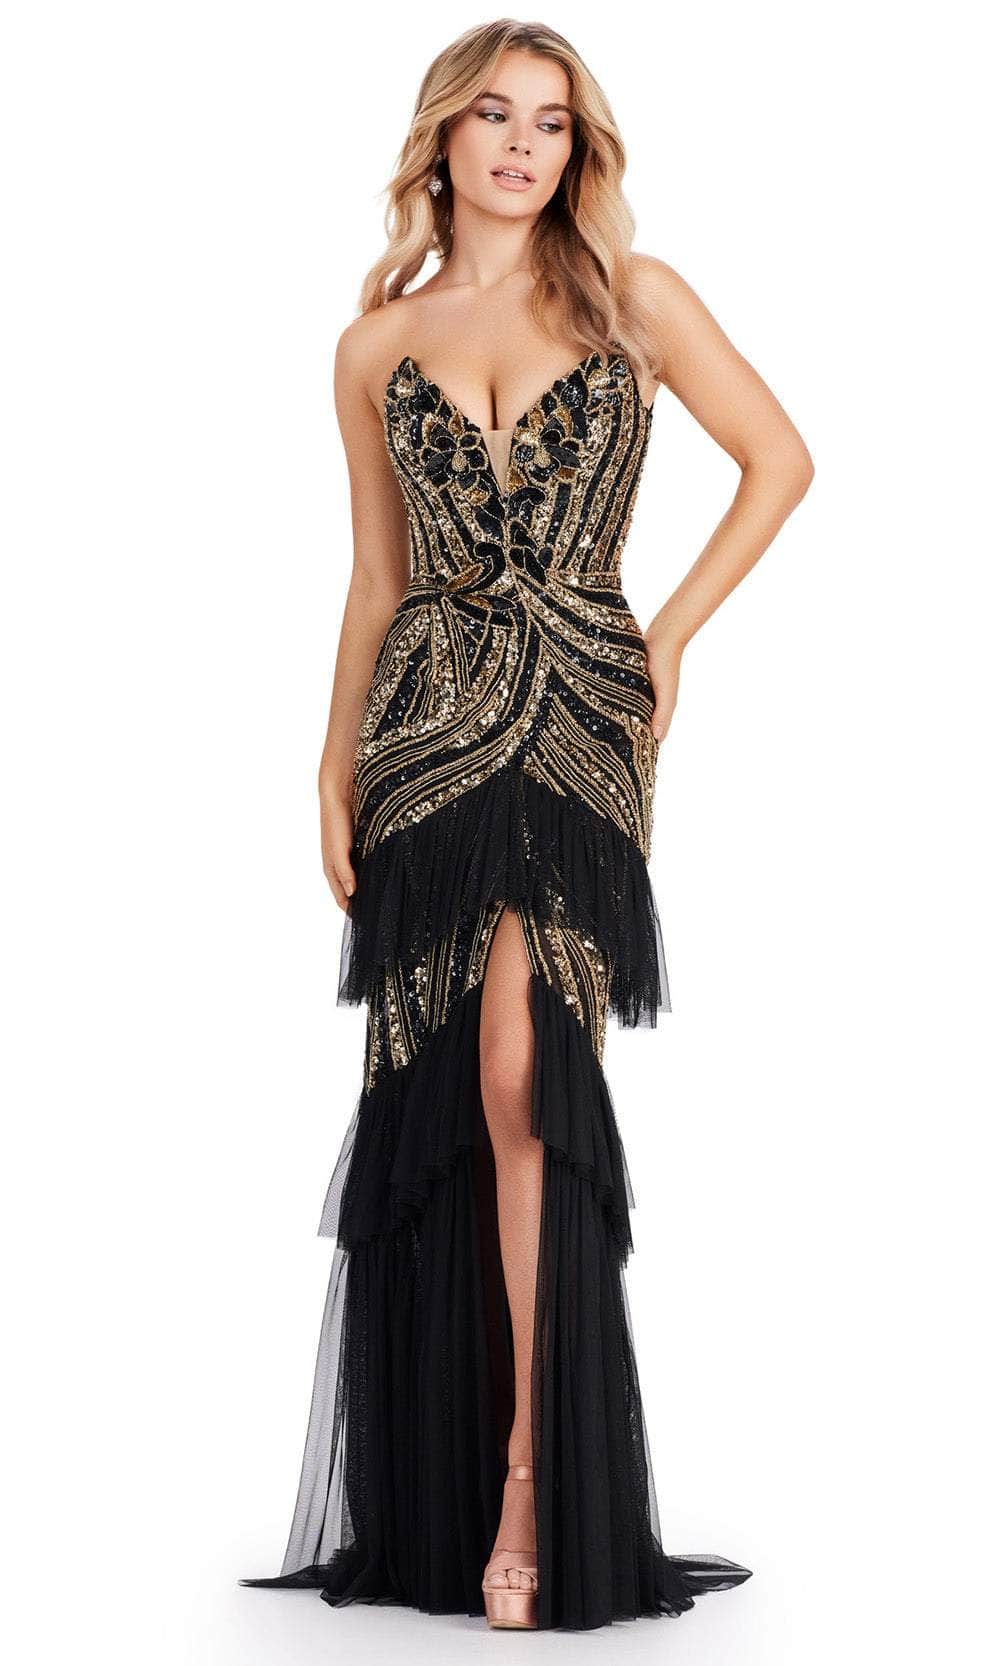 Ashley Lauren 11438 - Ruffle Tiered Prom Dress 00 /  Gold / Black